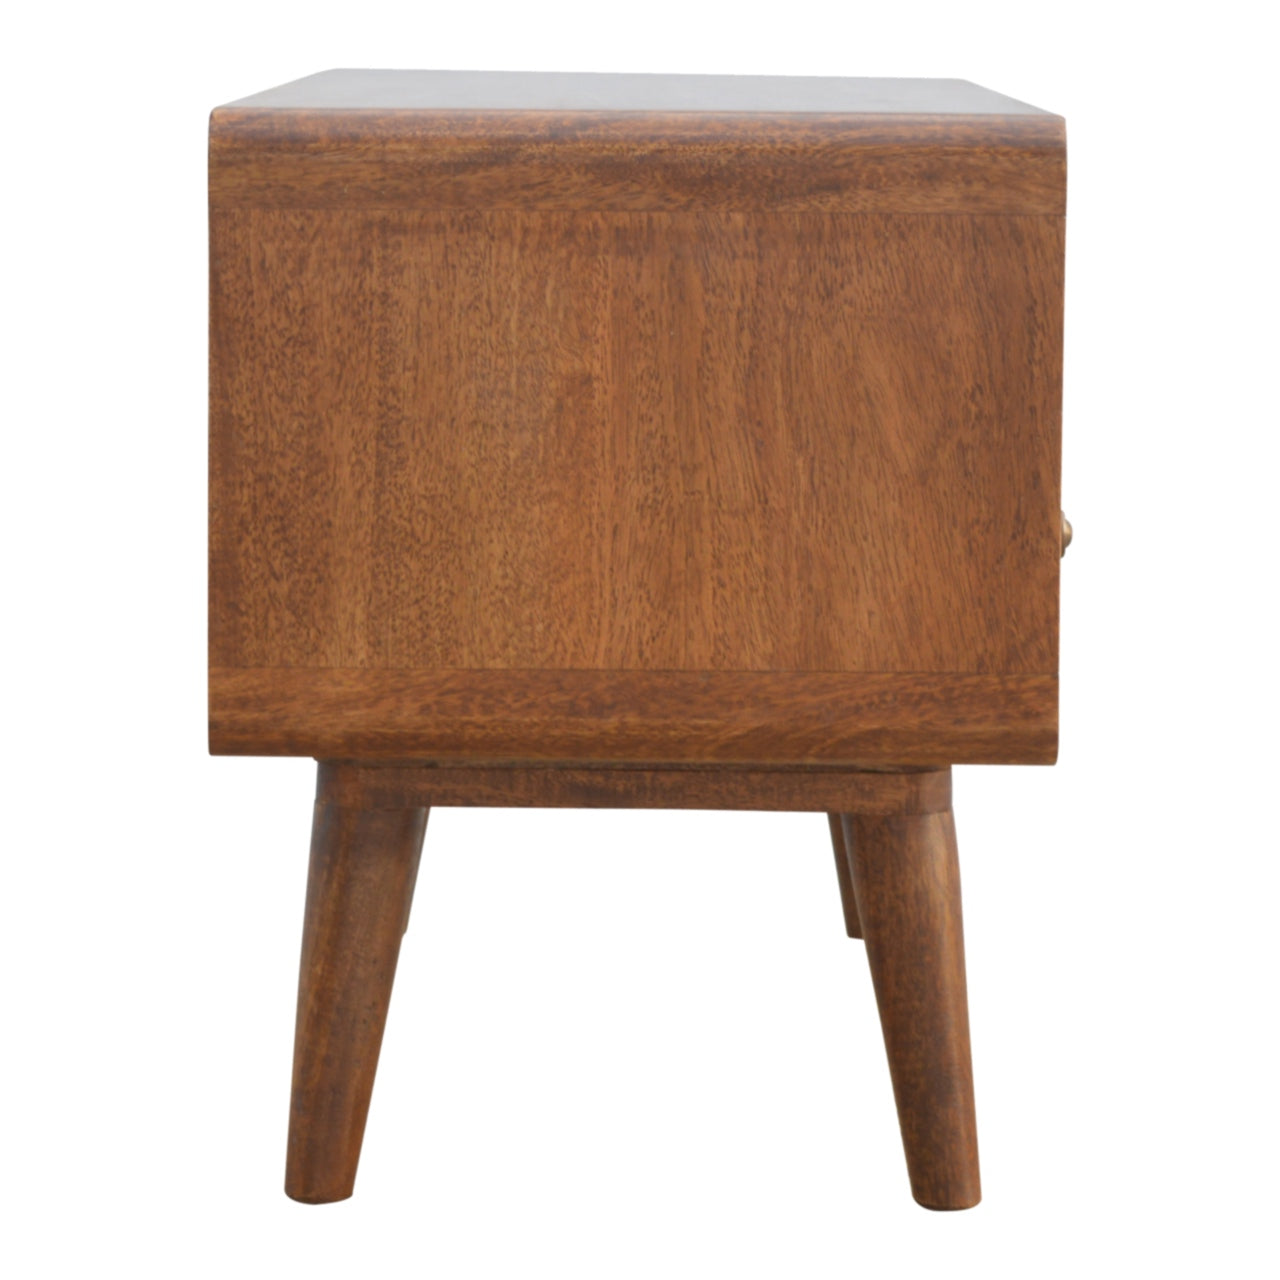 Century handmade wooden TV stand with 2 drawers in deep chestnut finish  | malletandplane.com 